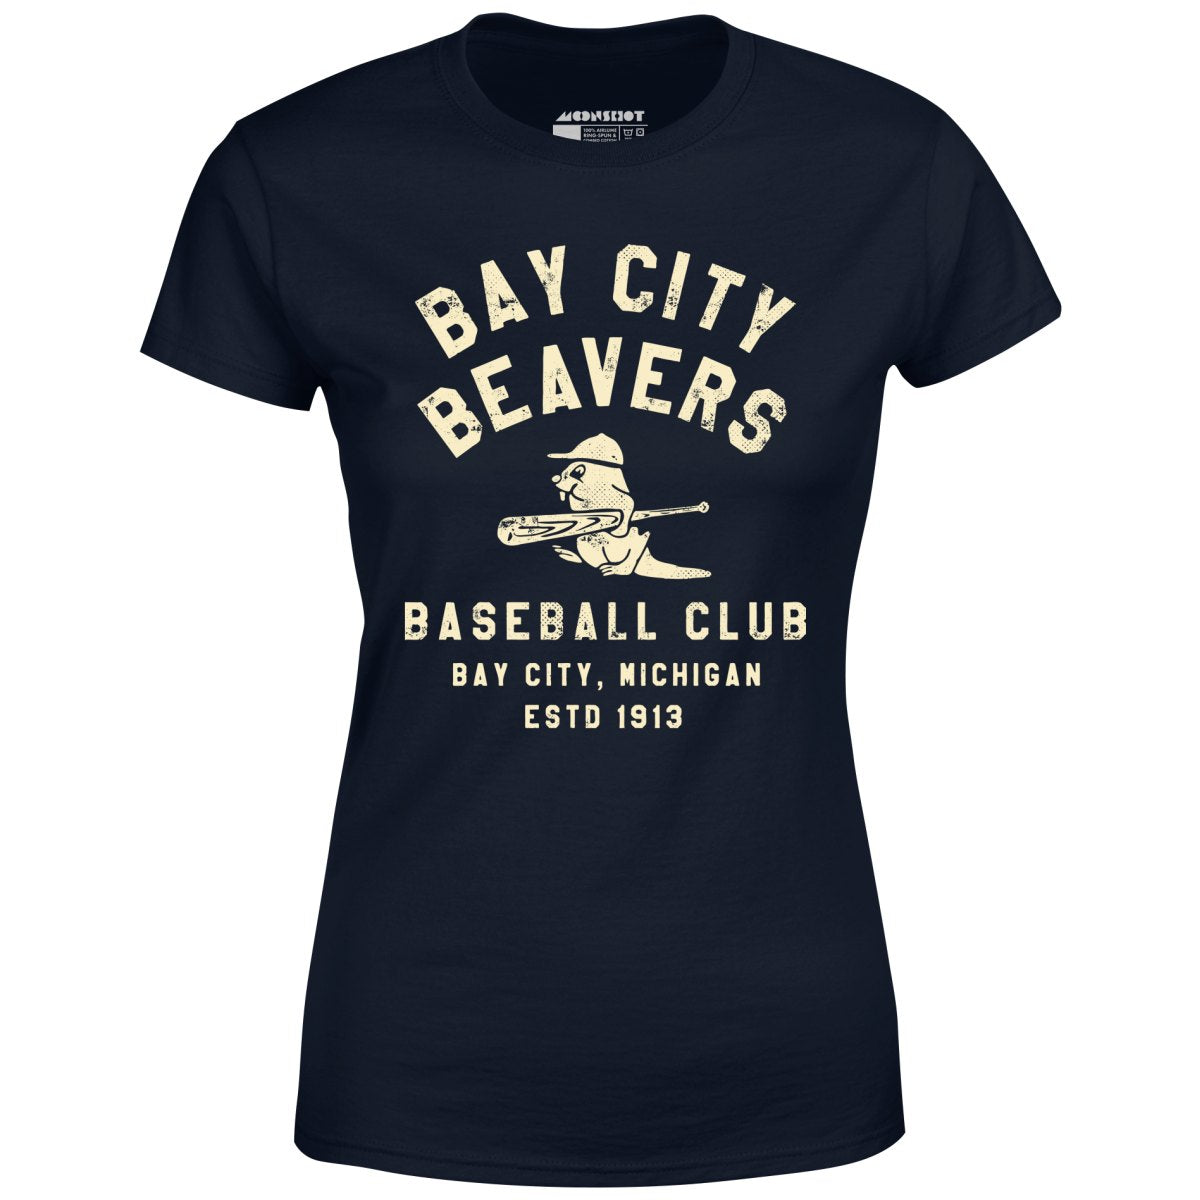 Bay City Beavers - Michigan - Vintage Defunct Baseball Teams - Women's T-Shirt